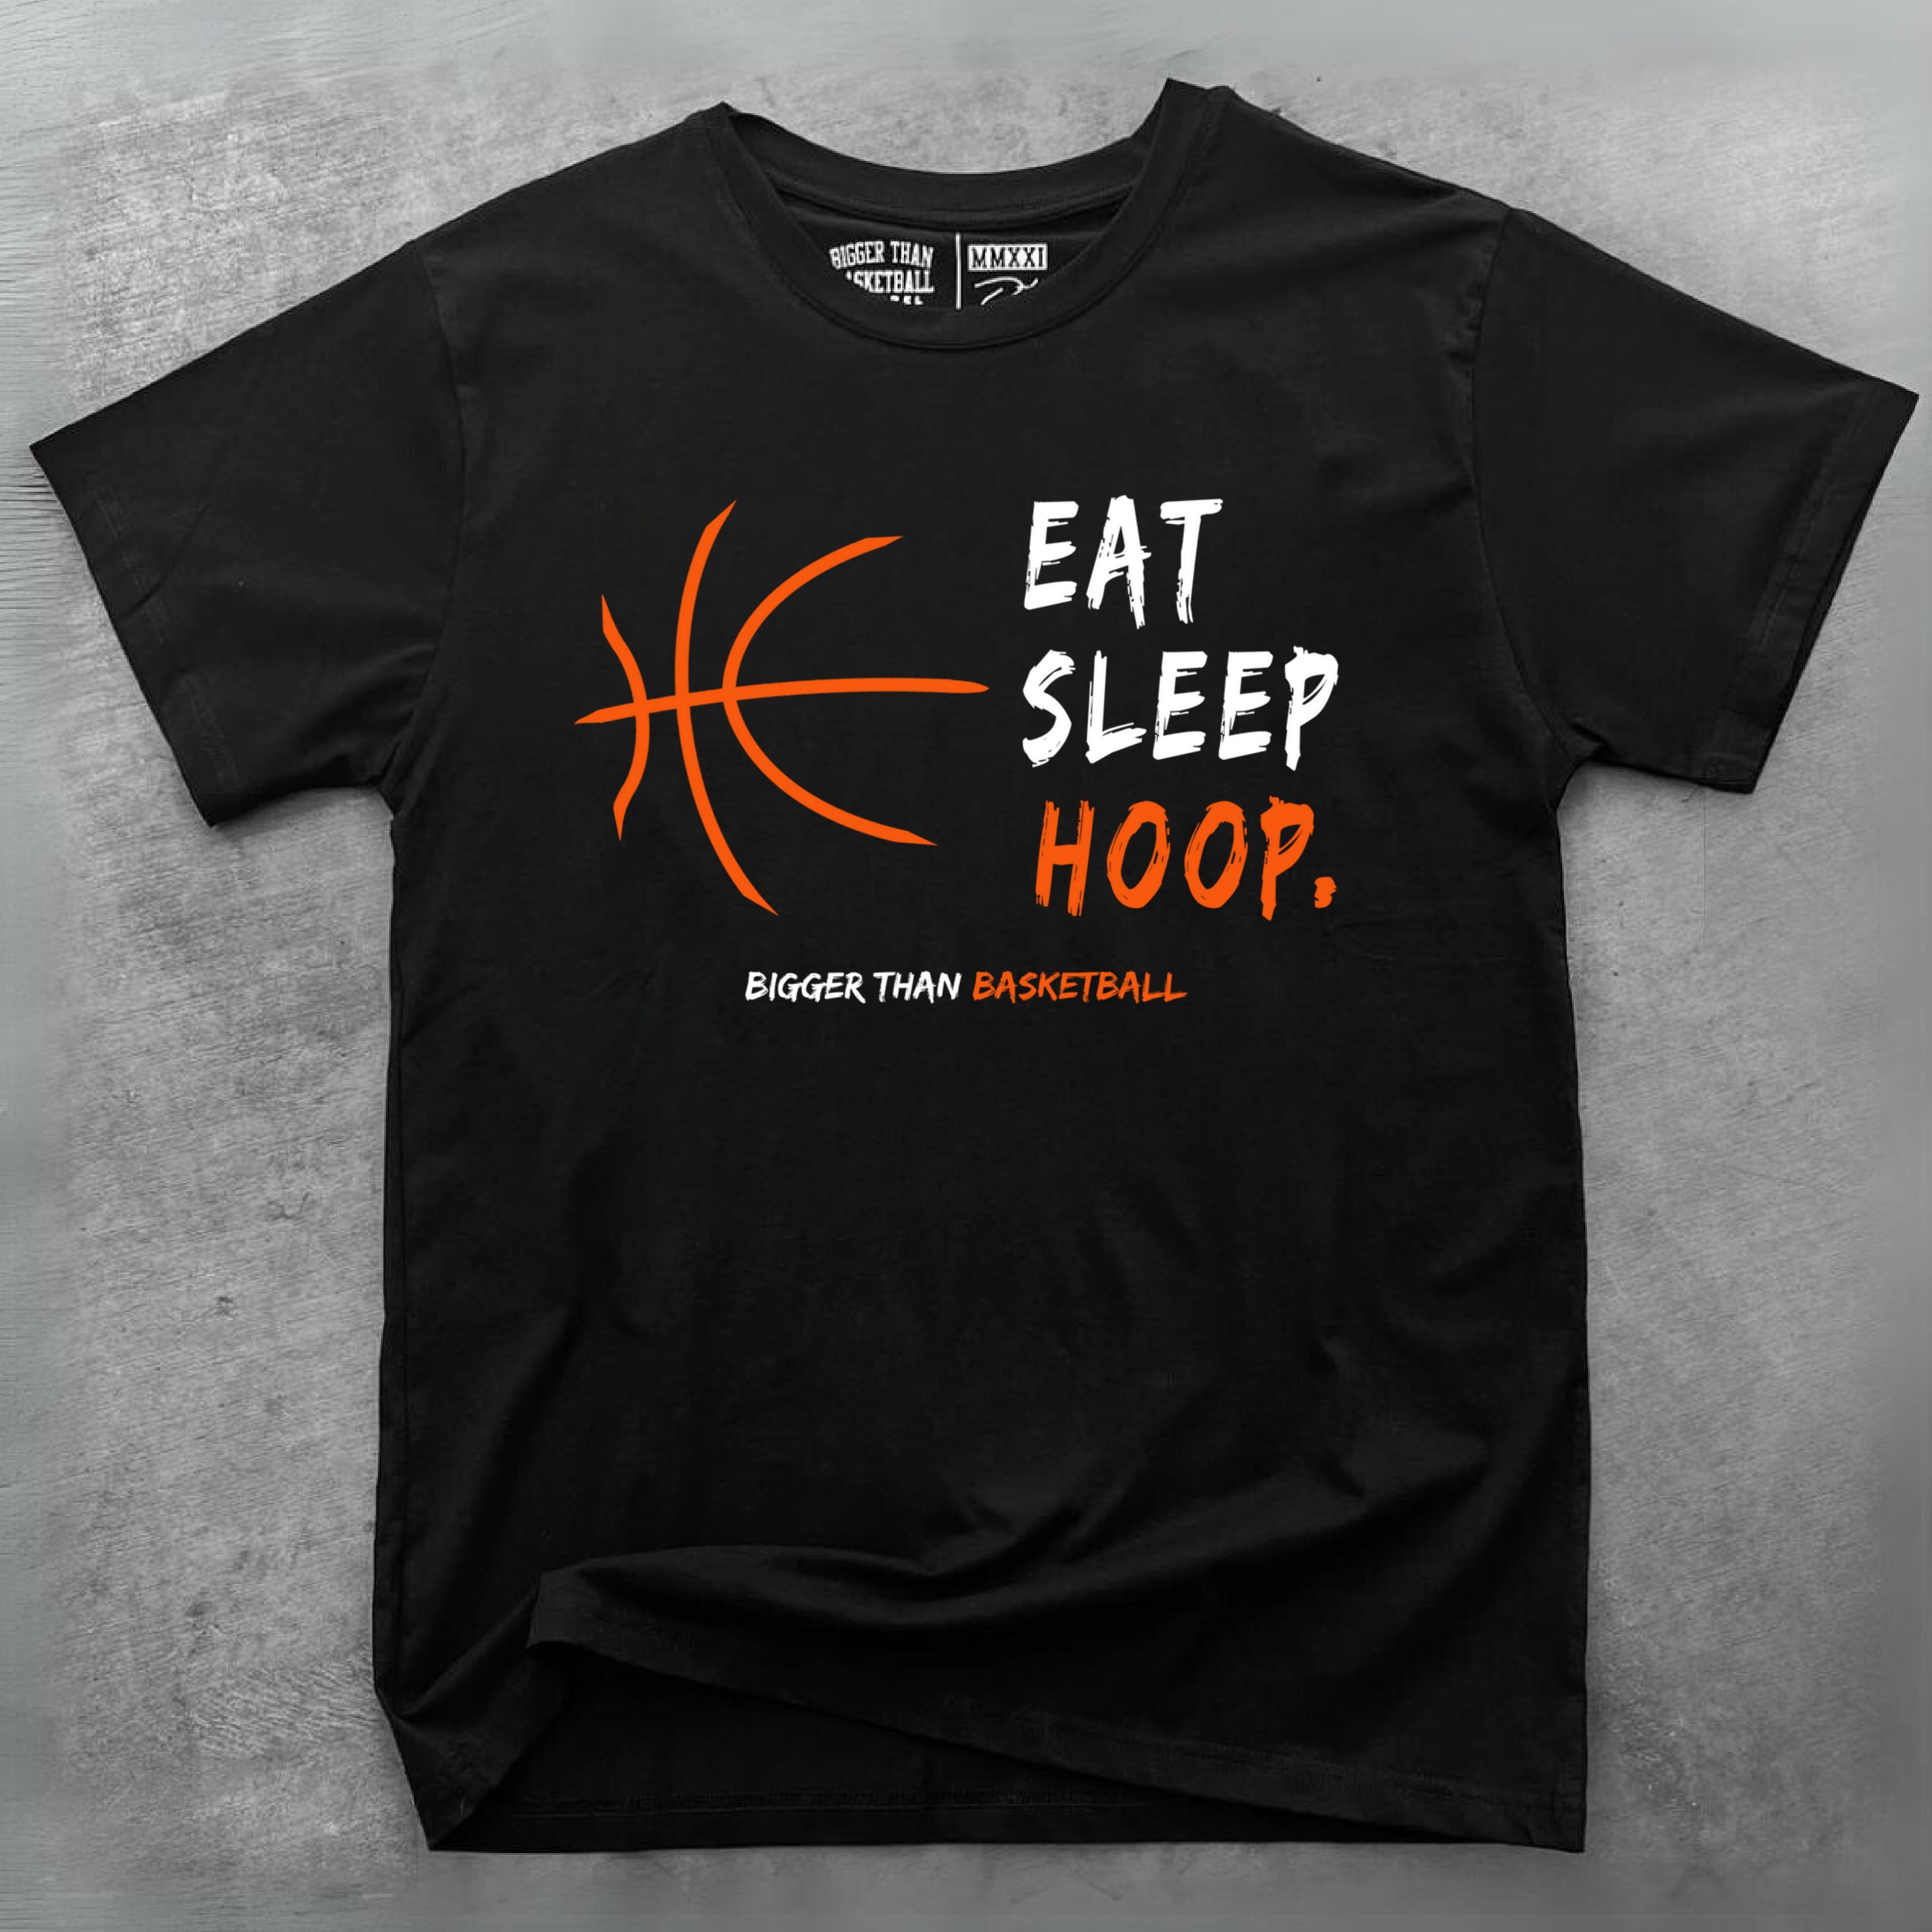 Eat, Sleep, Hoop. - T-shirt - Black